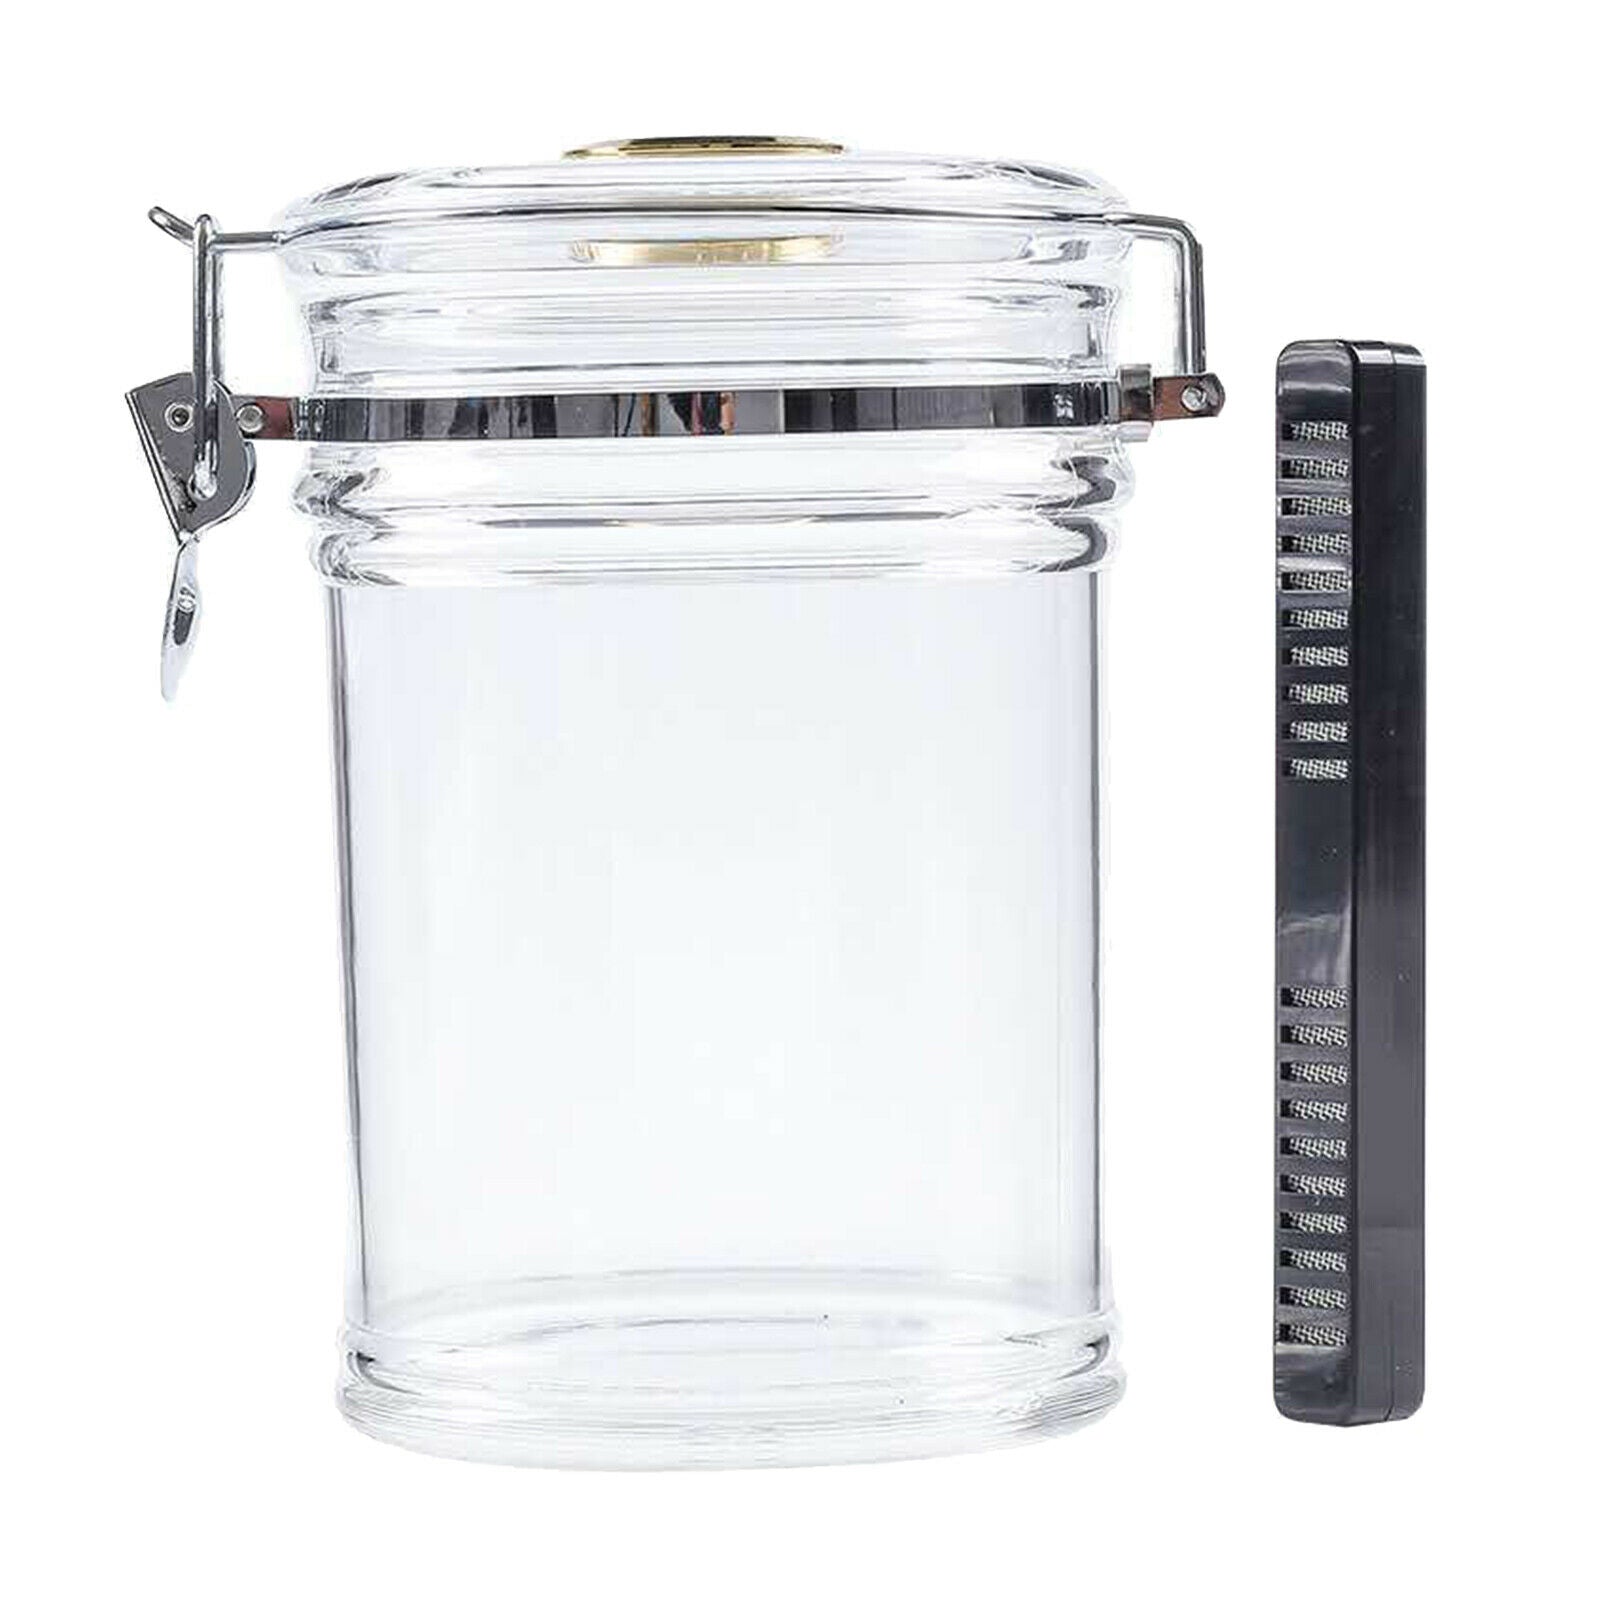 Tobacco Humidor Pot with Humidifier 15-20 Portable Humidor Box Container